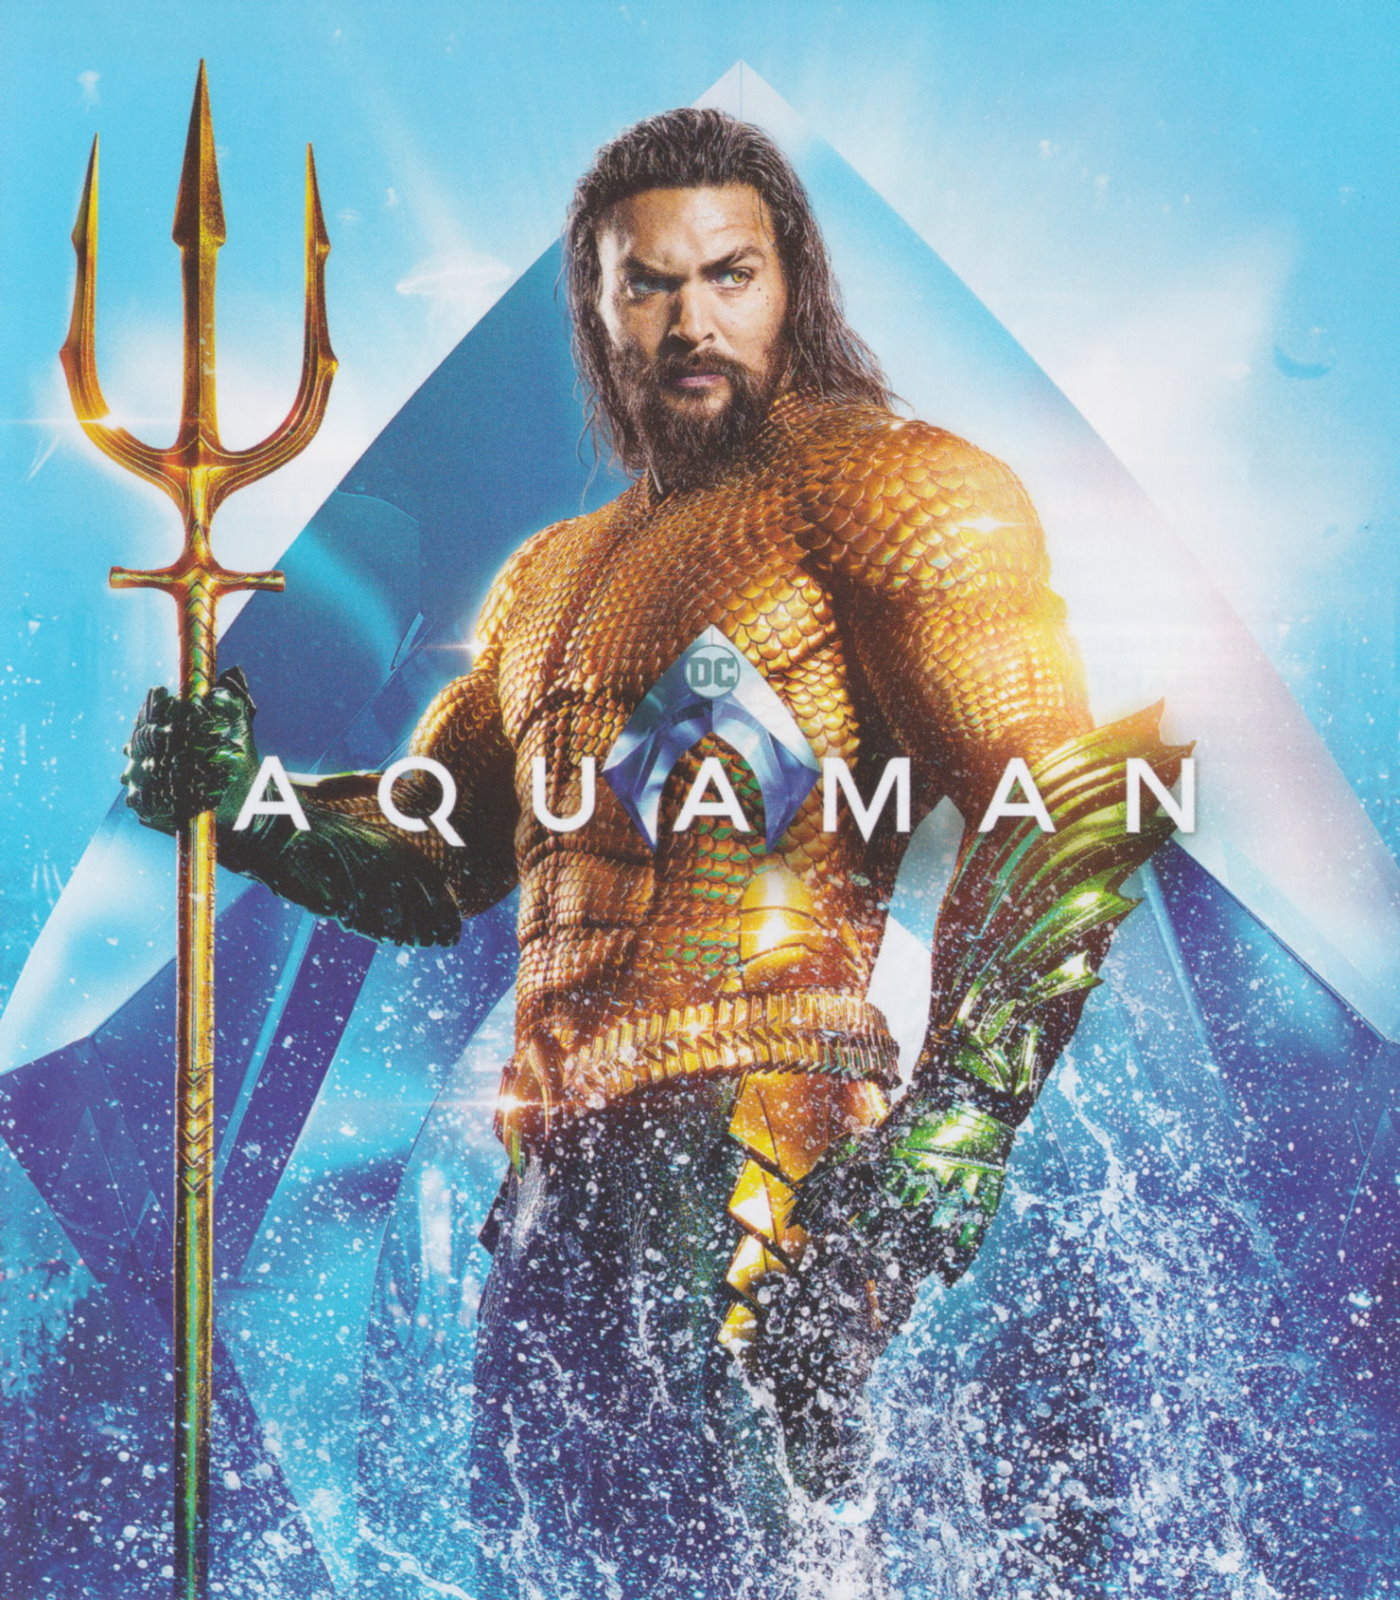 Cover - Aquaman.jpg